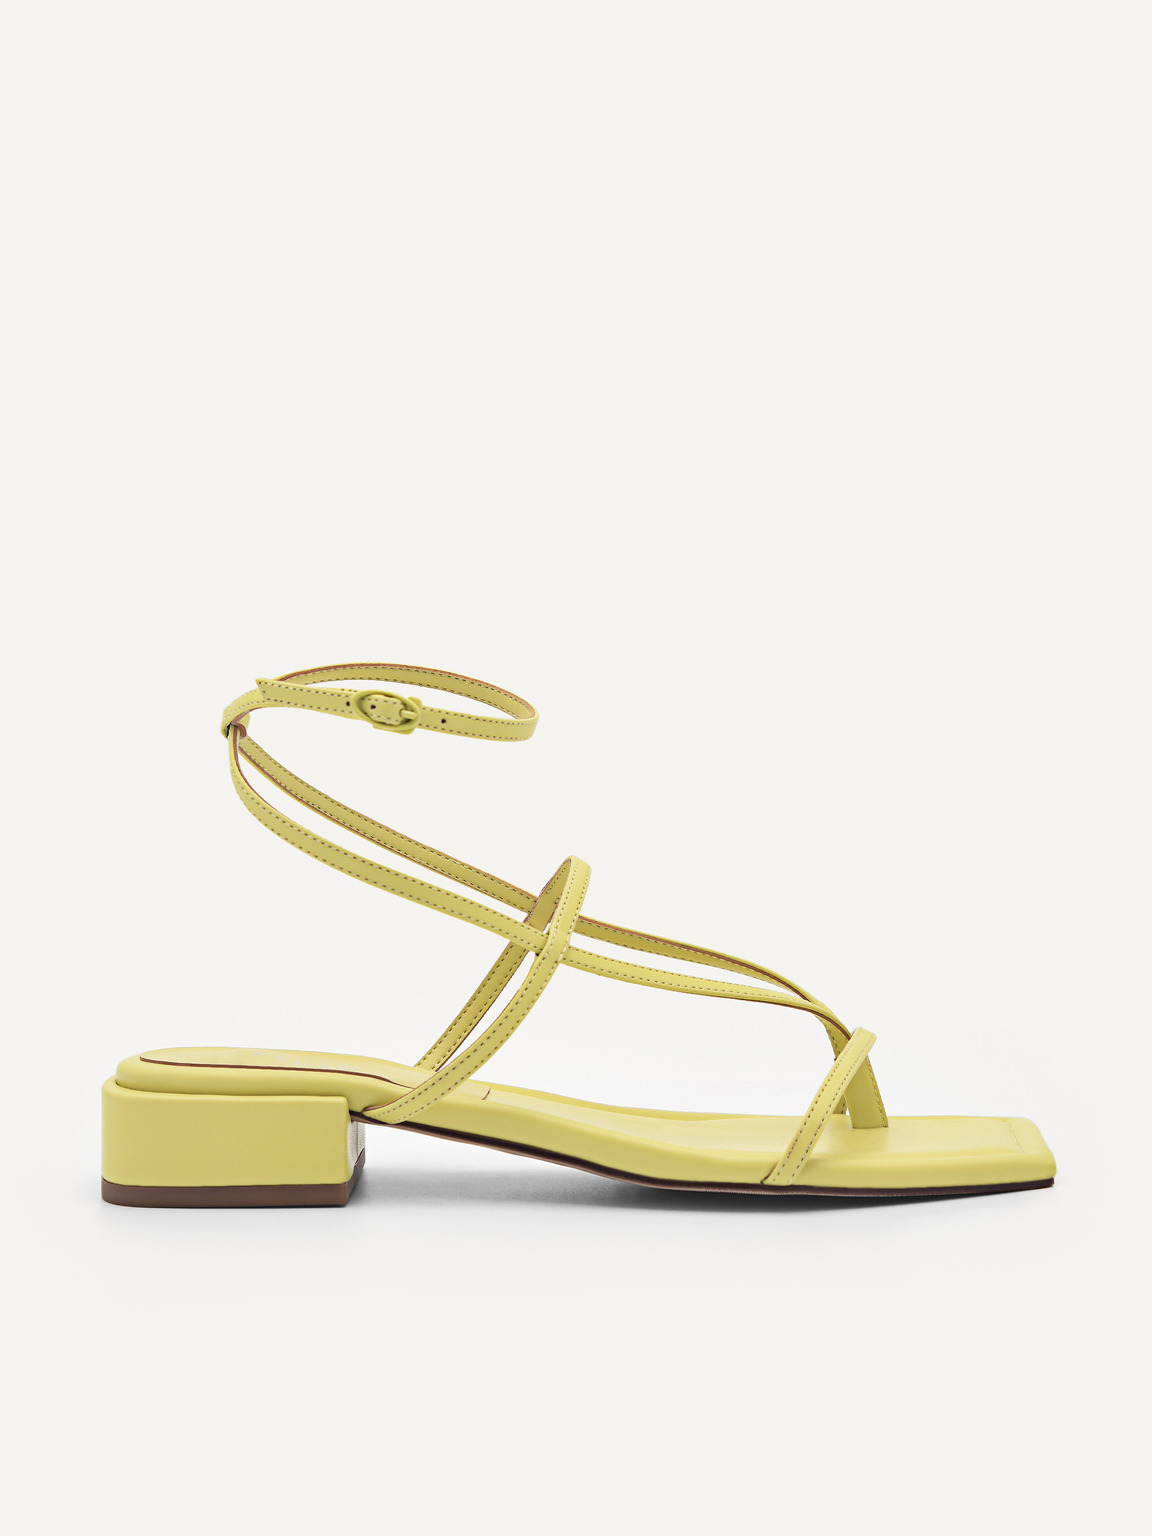 Jatte Strappy Sandals, Yellow